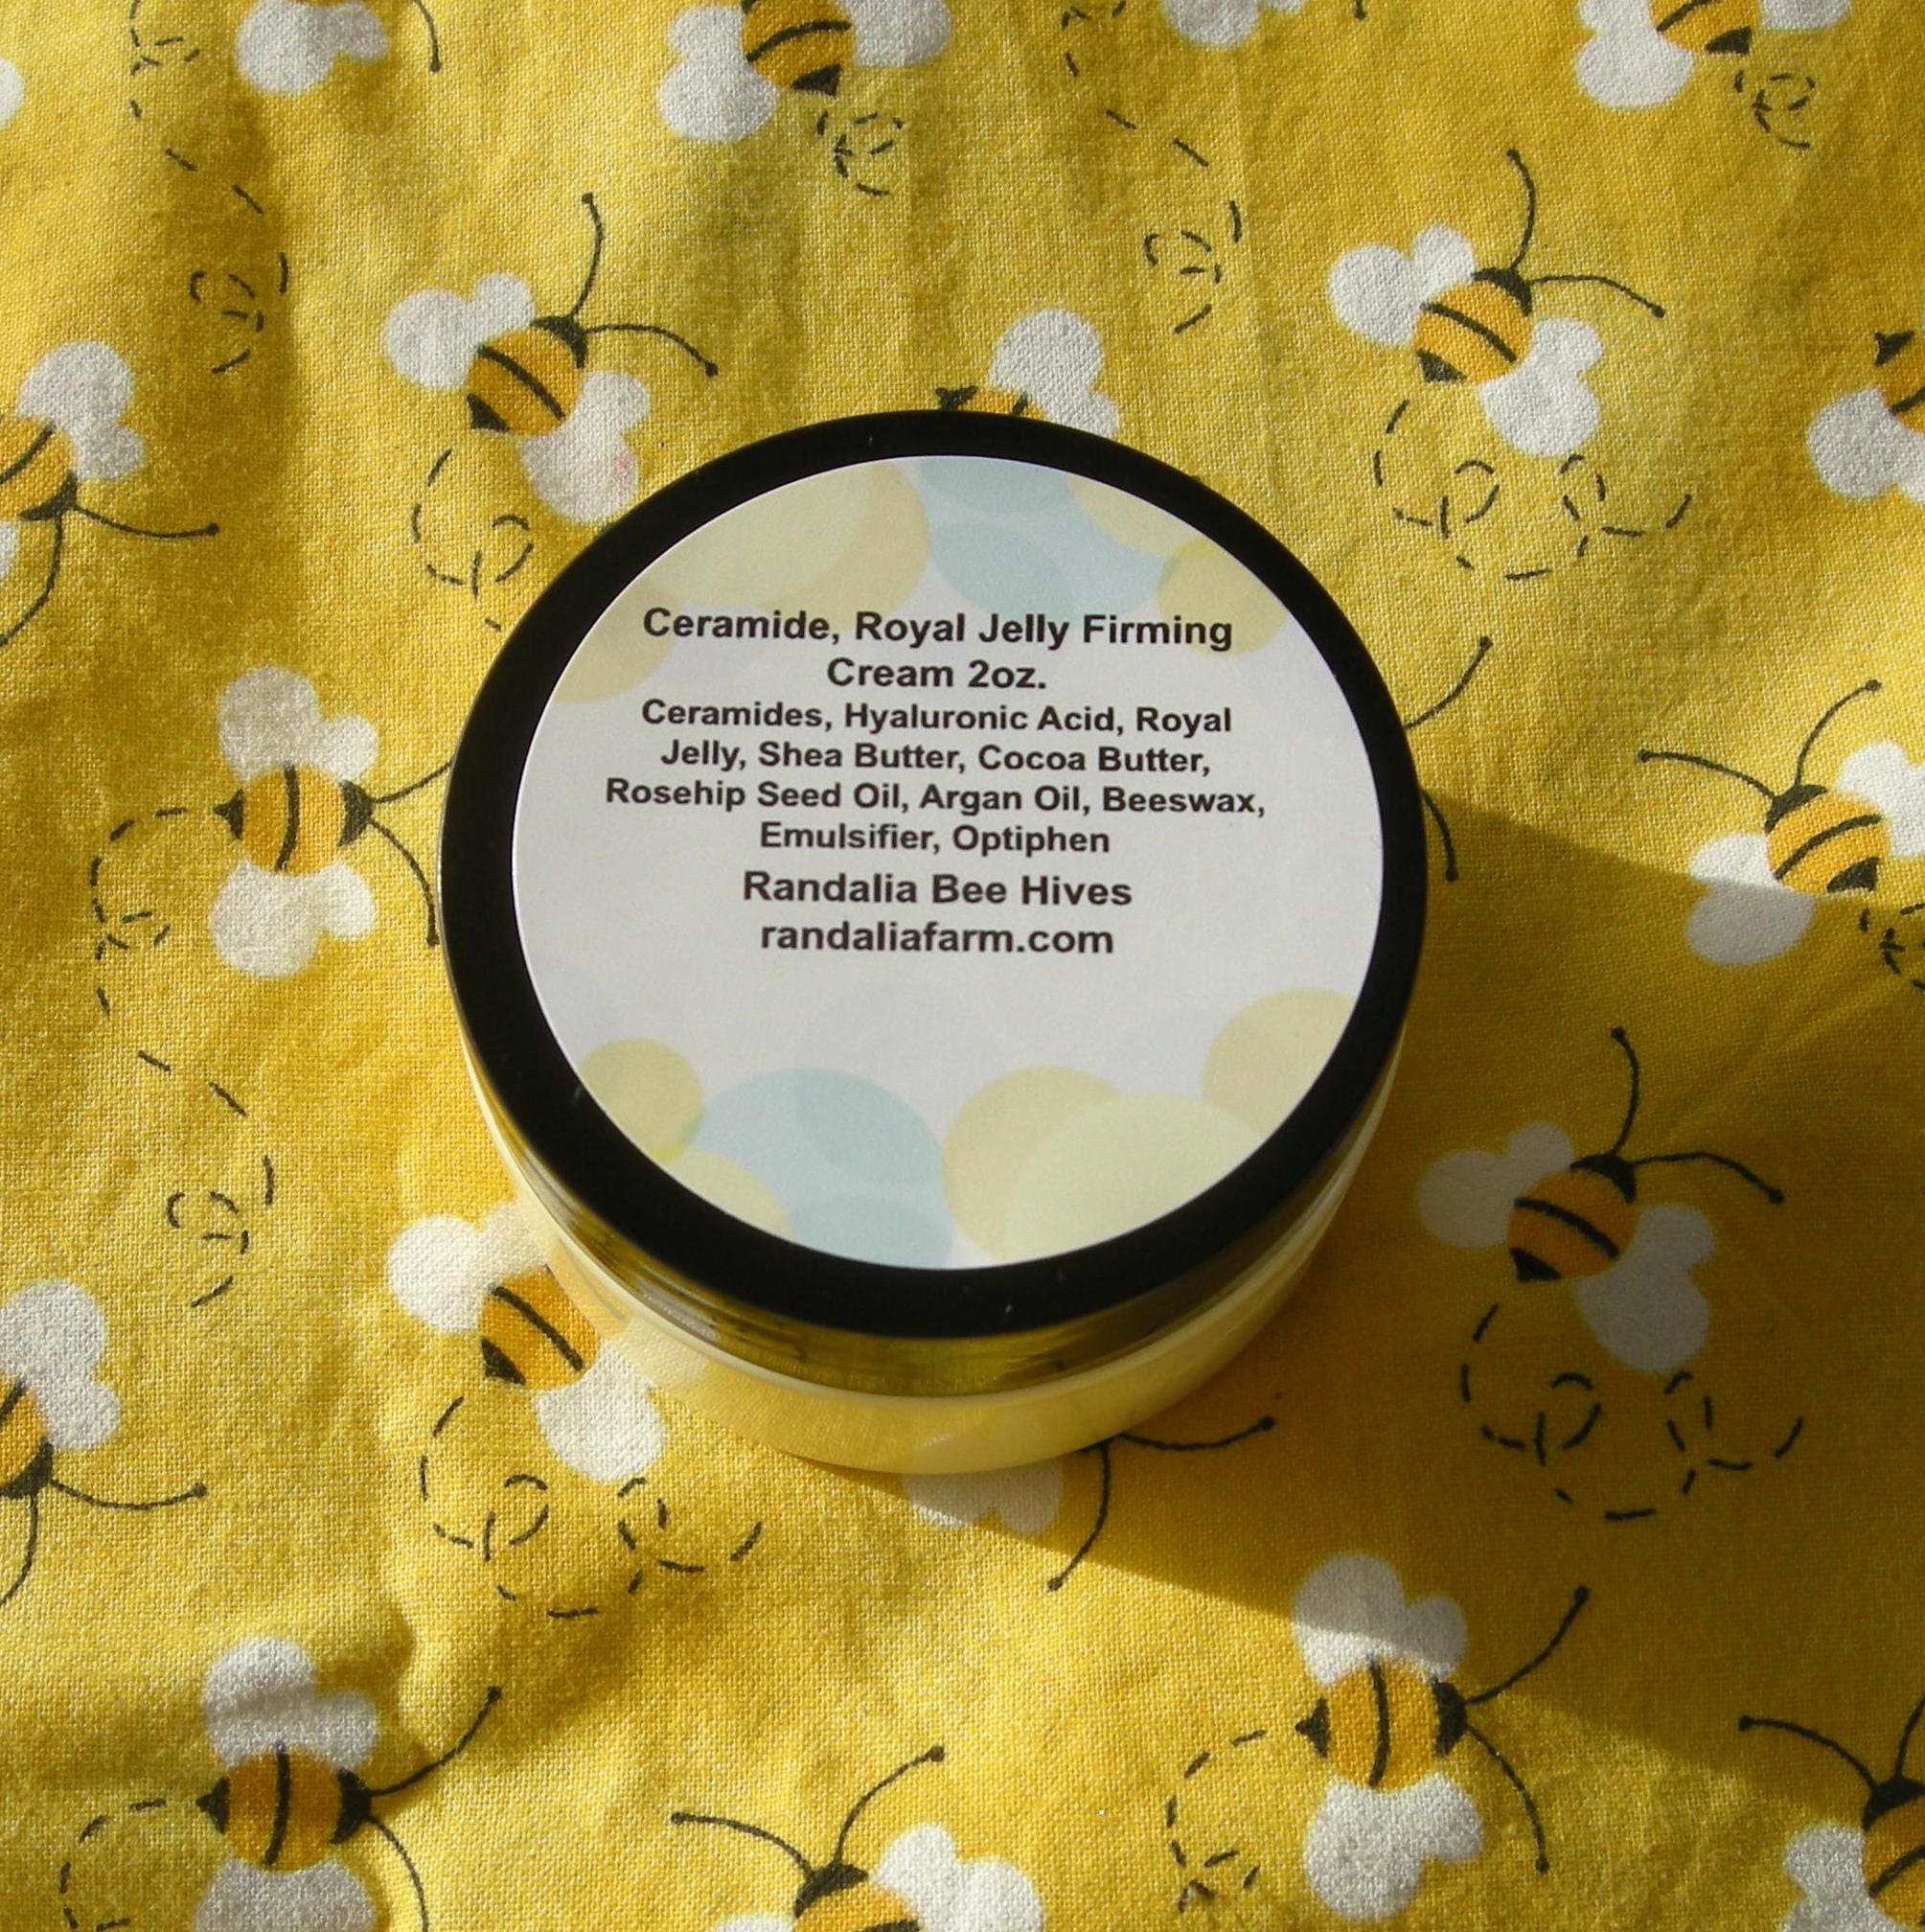 Majestic Pure Whipped Argan Oil Body Butter for Women & Men - with  Ceramides, Vitamin E & A & Vegan Collagen- 8oz 